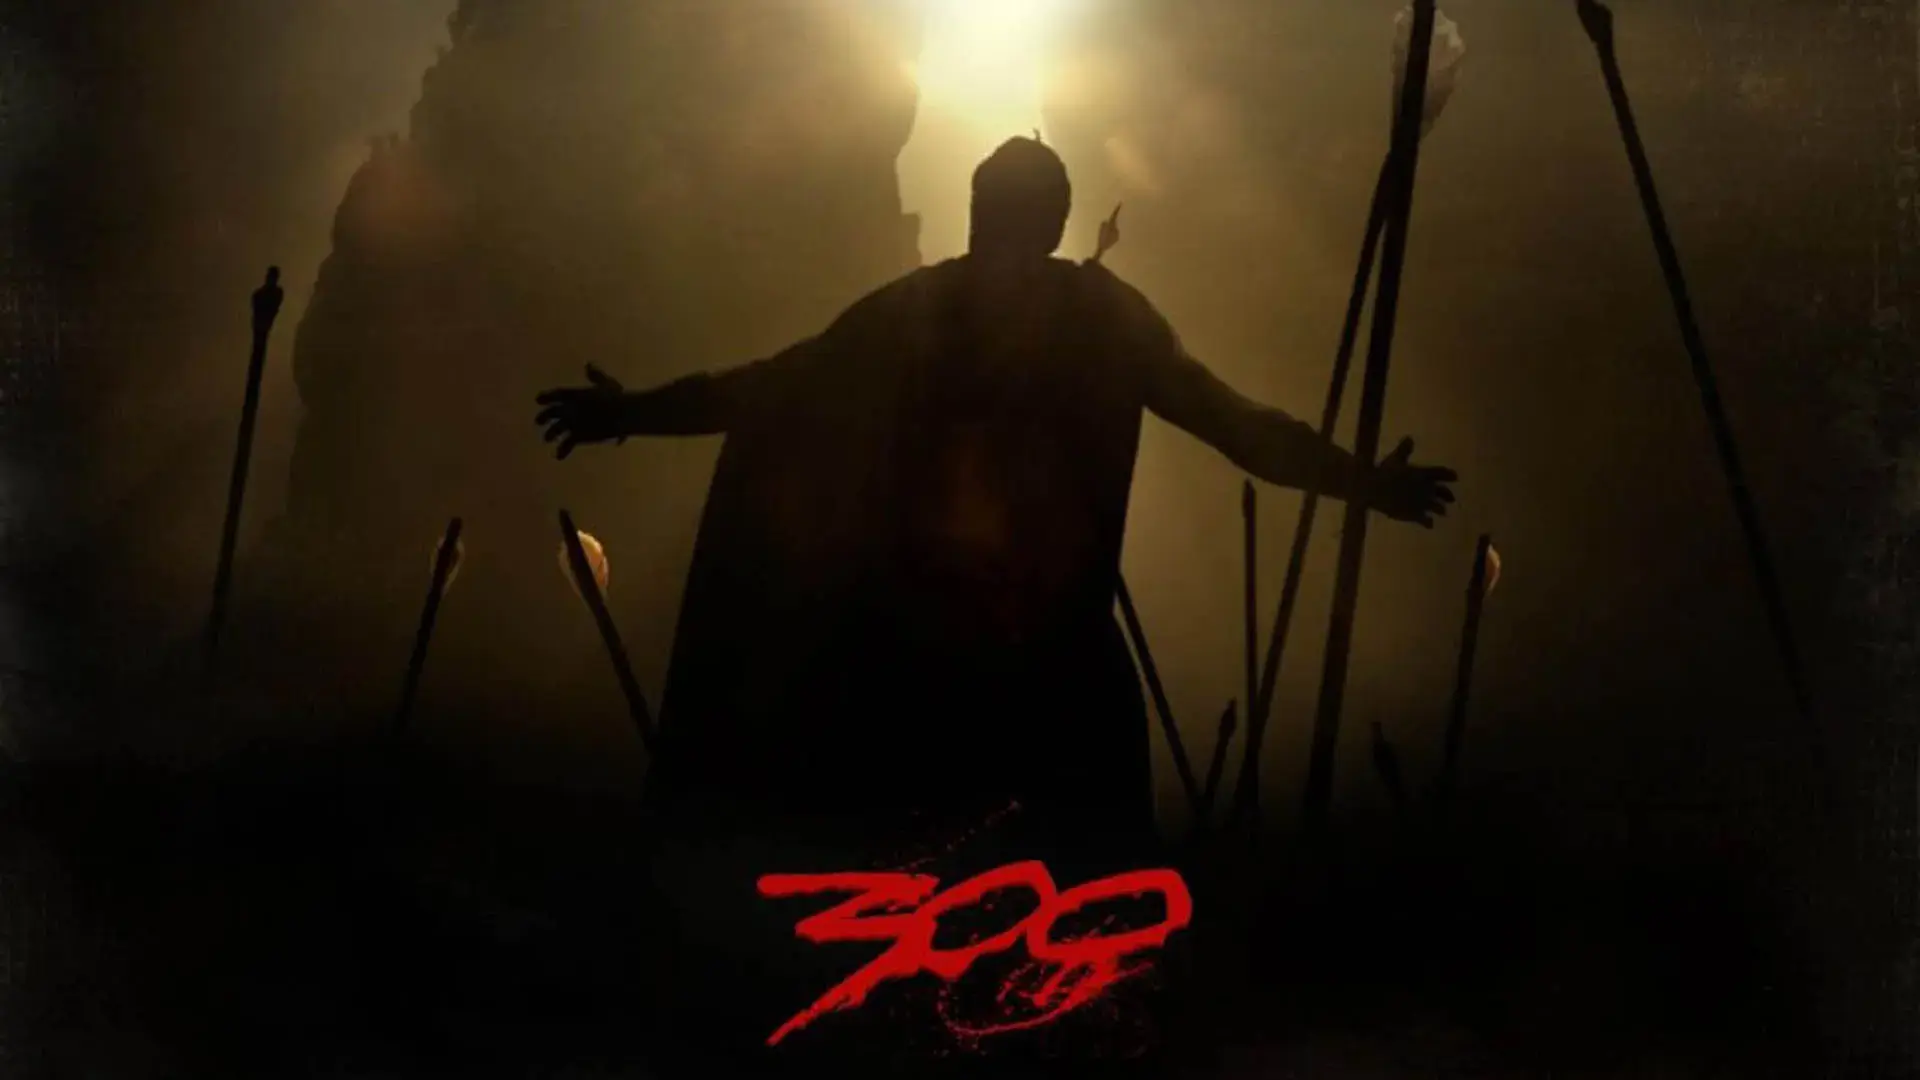 Movie 300 wallpaper 3 | Background Image